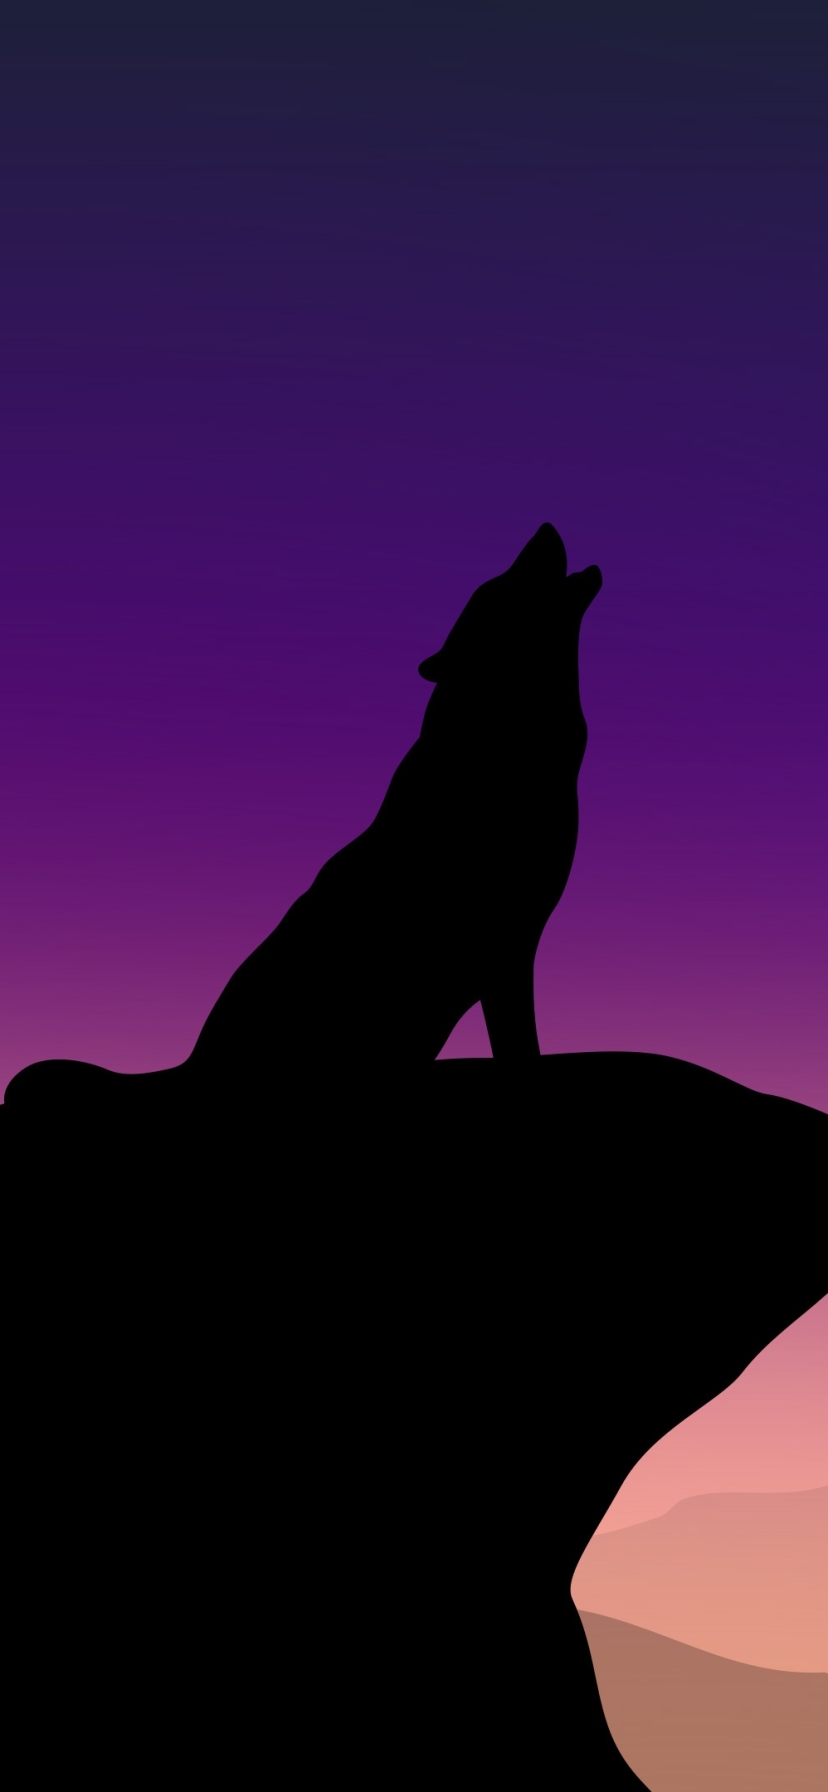 Descarga gratuita de fondo de pantalla para móvil de Animales, Cielo, Noche, Silueta, Lobo, Wolves.